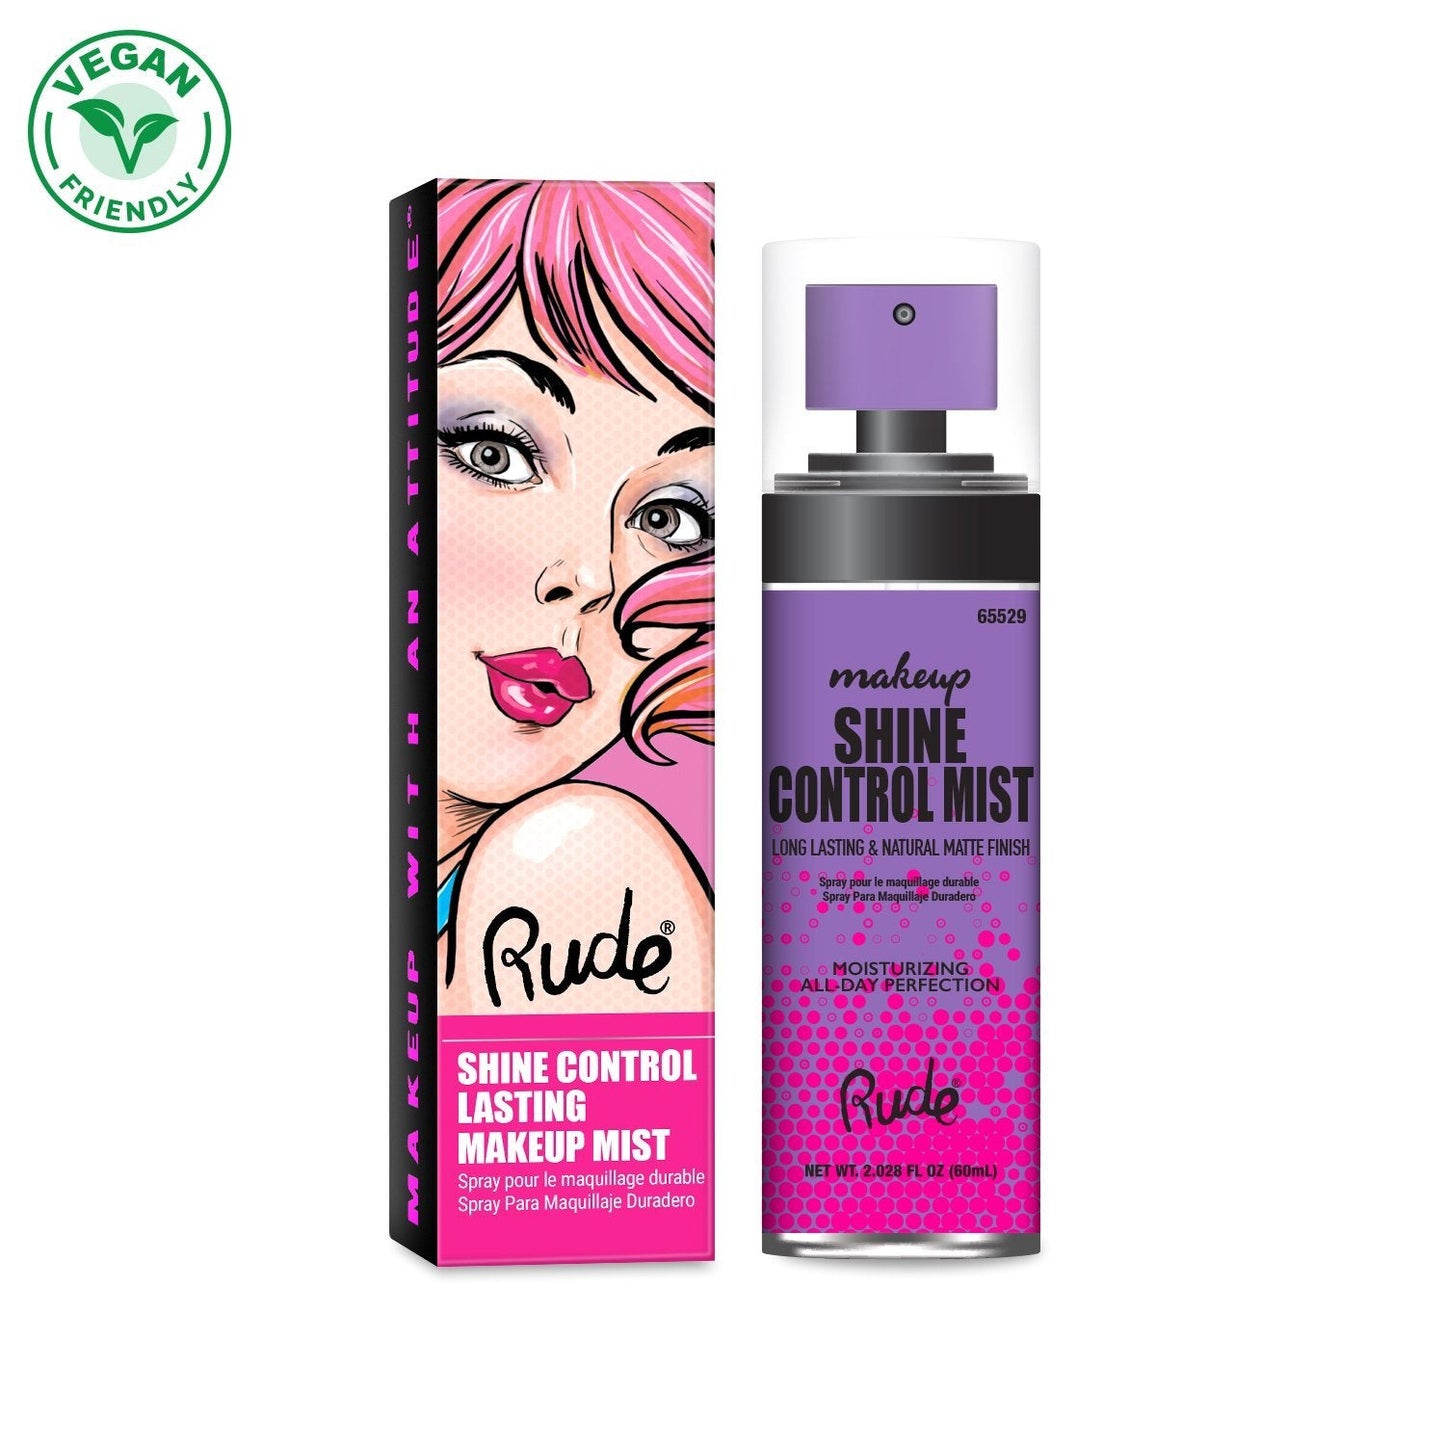 RUDE Shine Control Lasting Makeup Mist Display Set, 12 Pieces